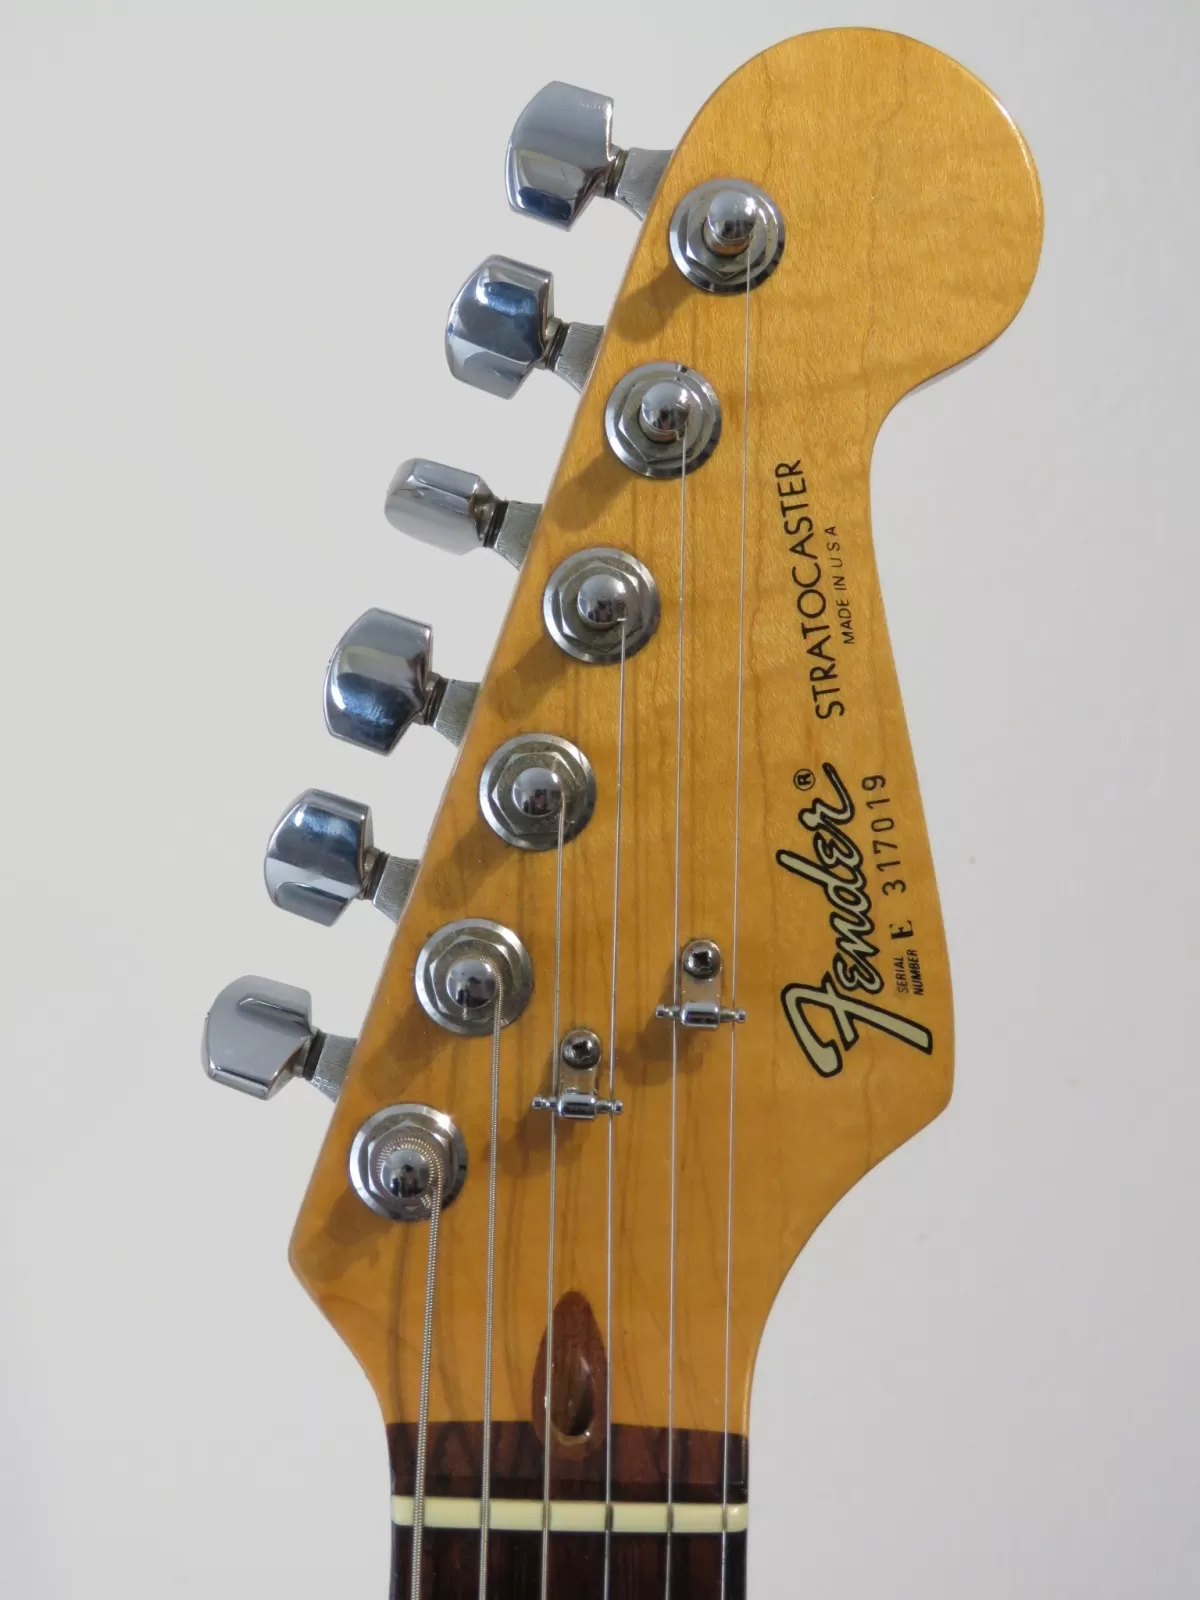 1983 Fender Stratocaster Elite with Hiscox Hard Case - Stunning Guitar